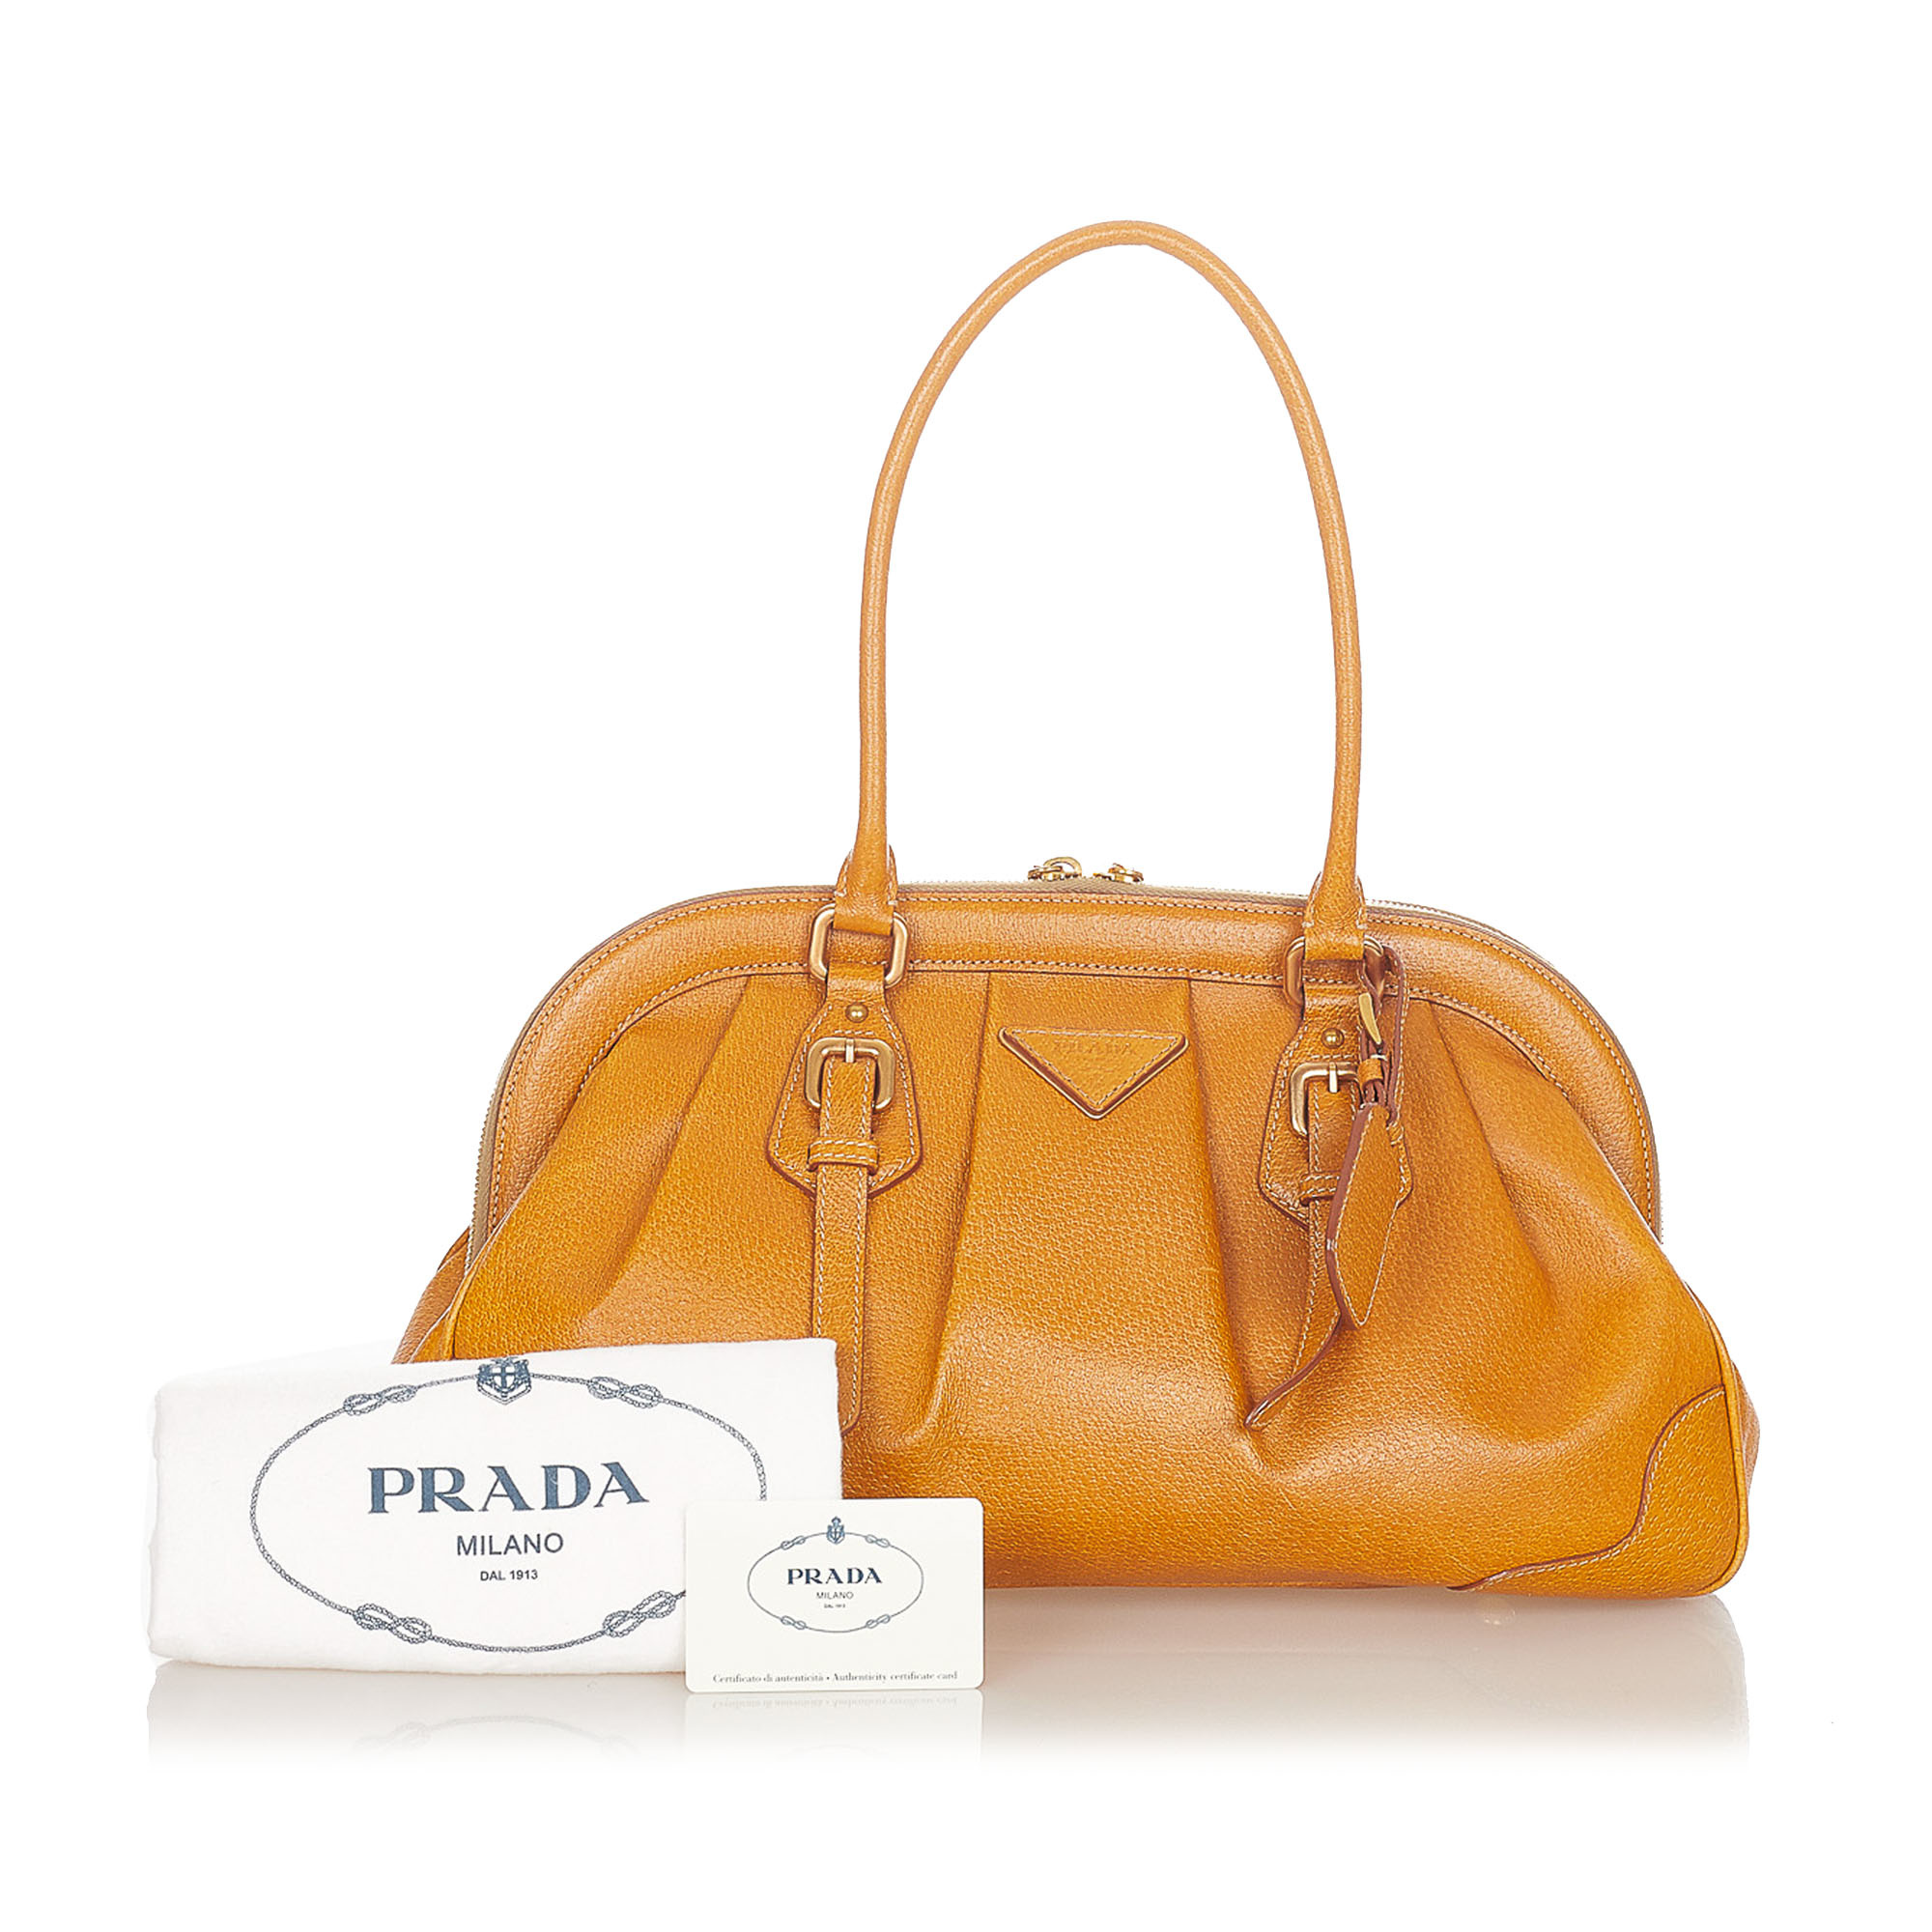 Vintage Prada Leather Bag